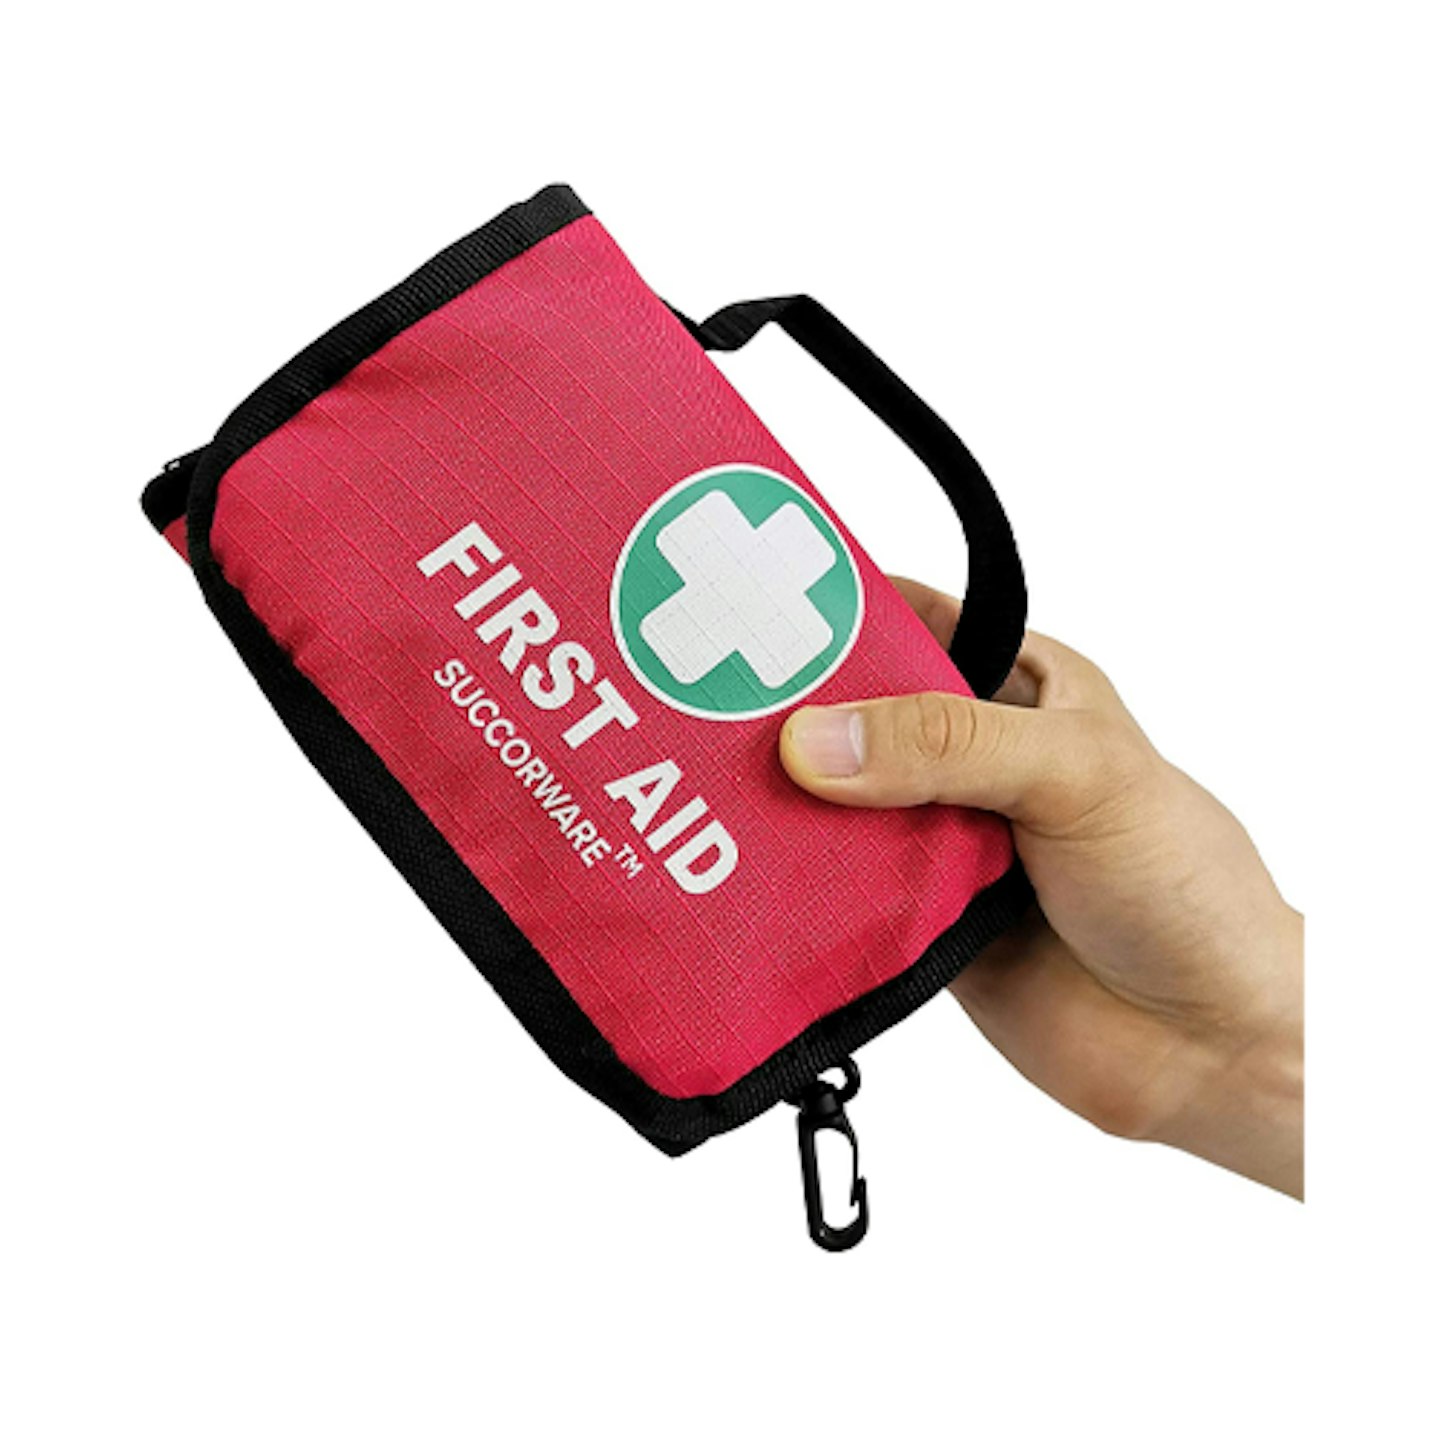 SuccorWare Small First Aid Kit